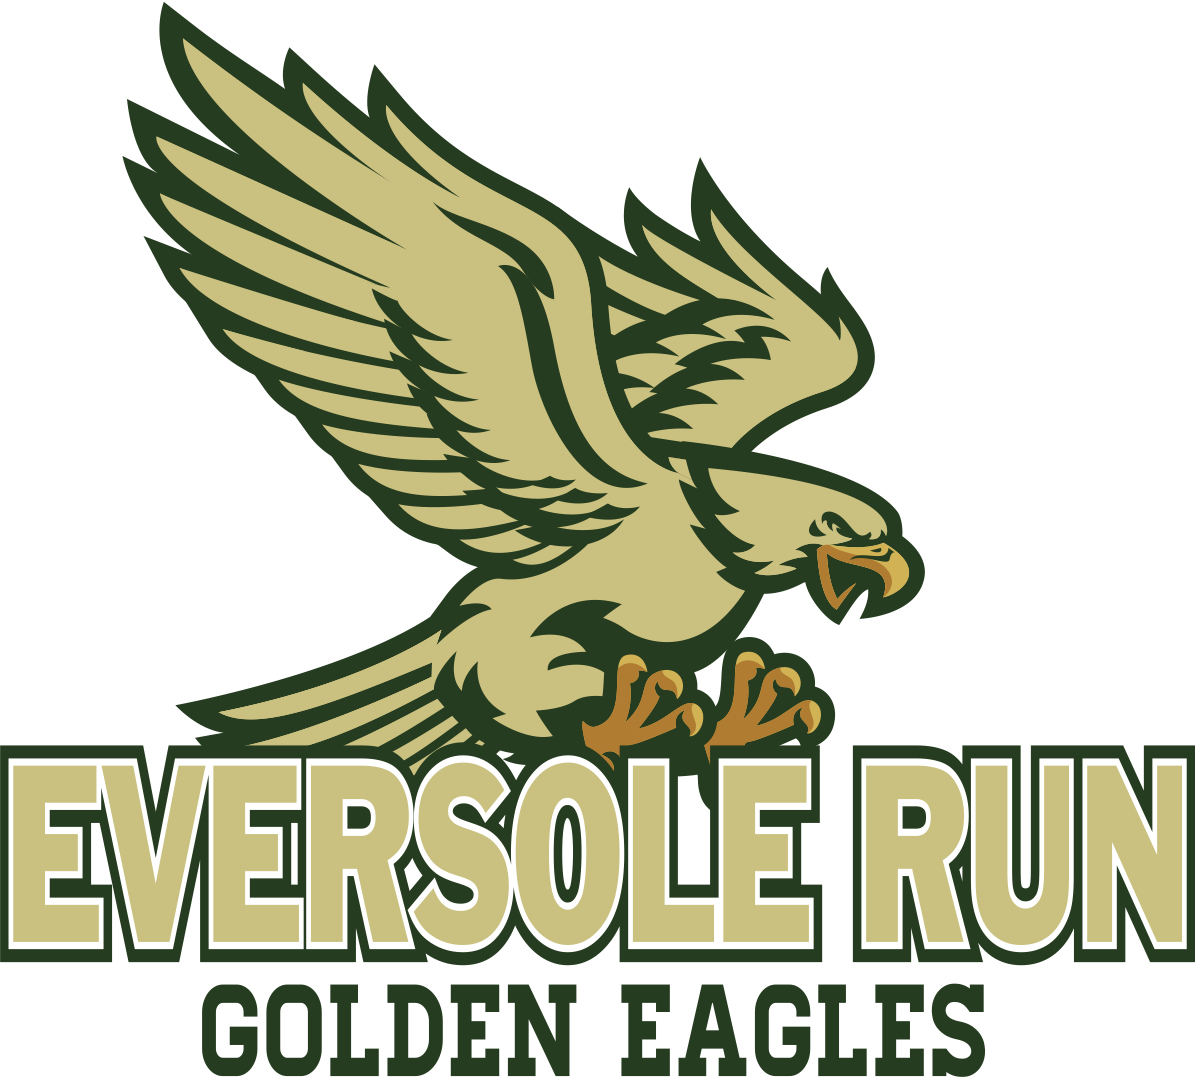 Eversole Run Middle School